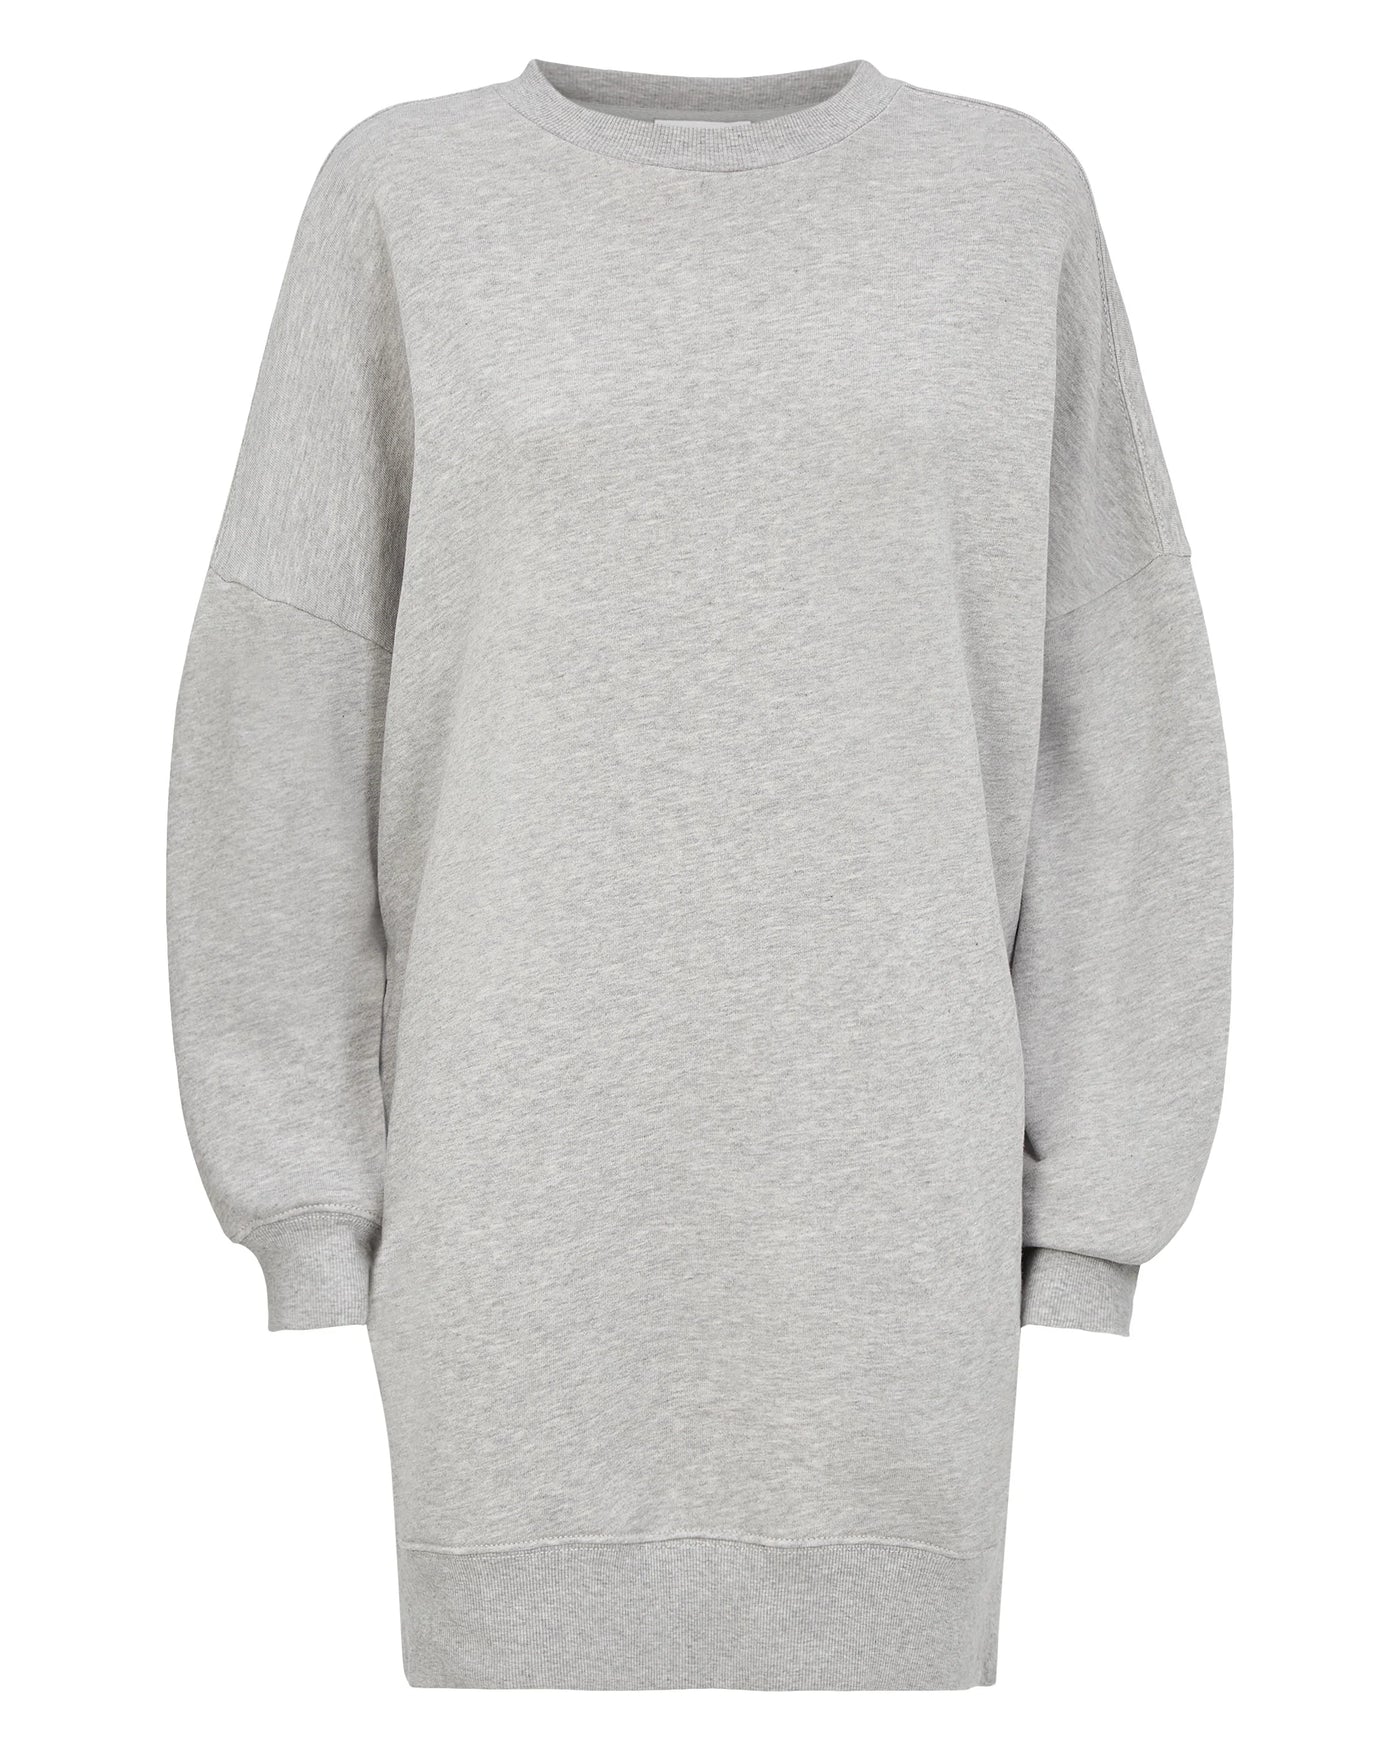 Grey long Sweatshirt tops for women